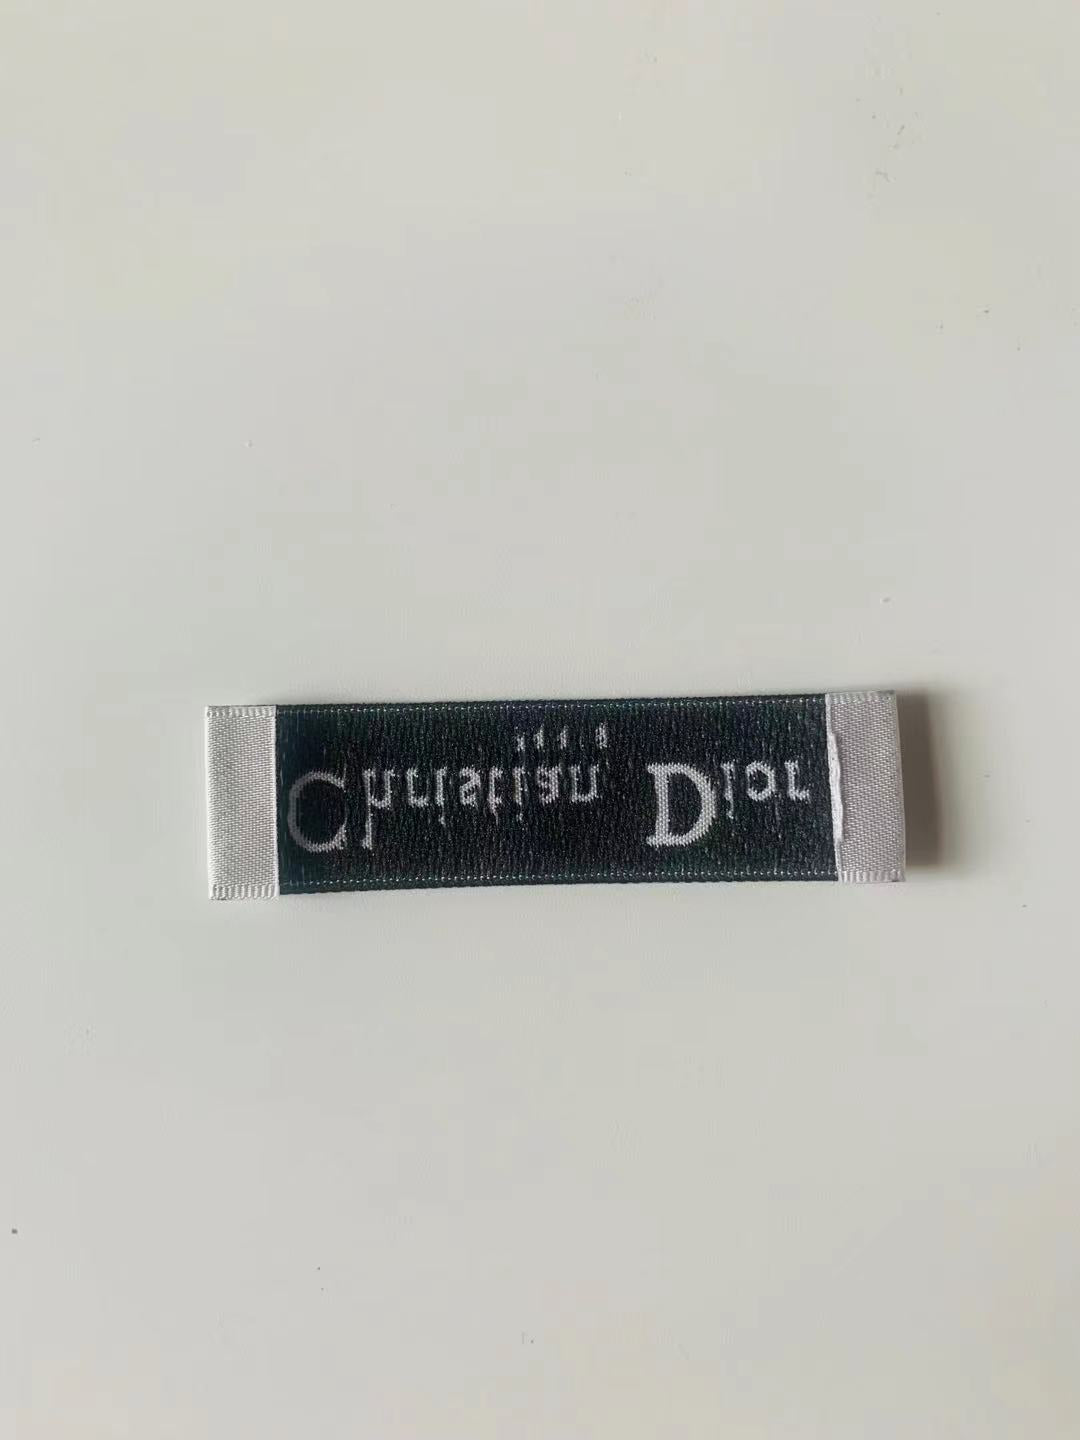 Classic Dior Label For Handmade Goods